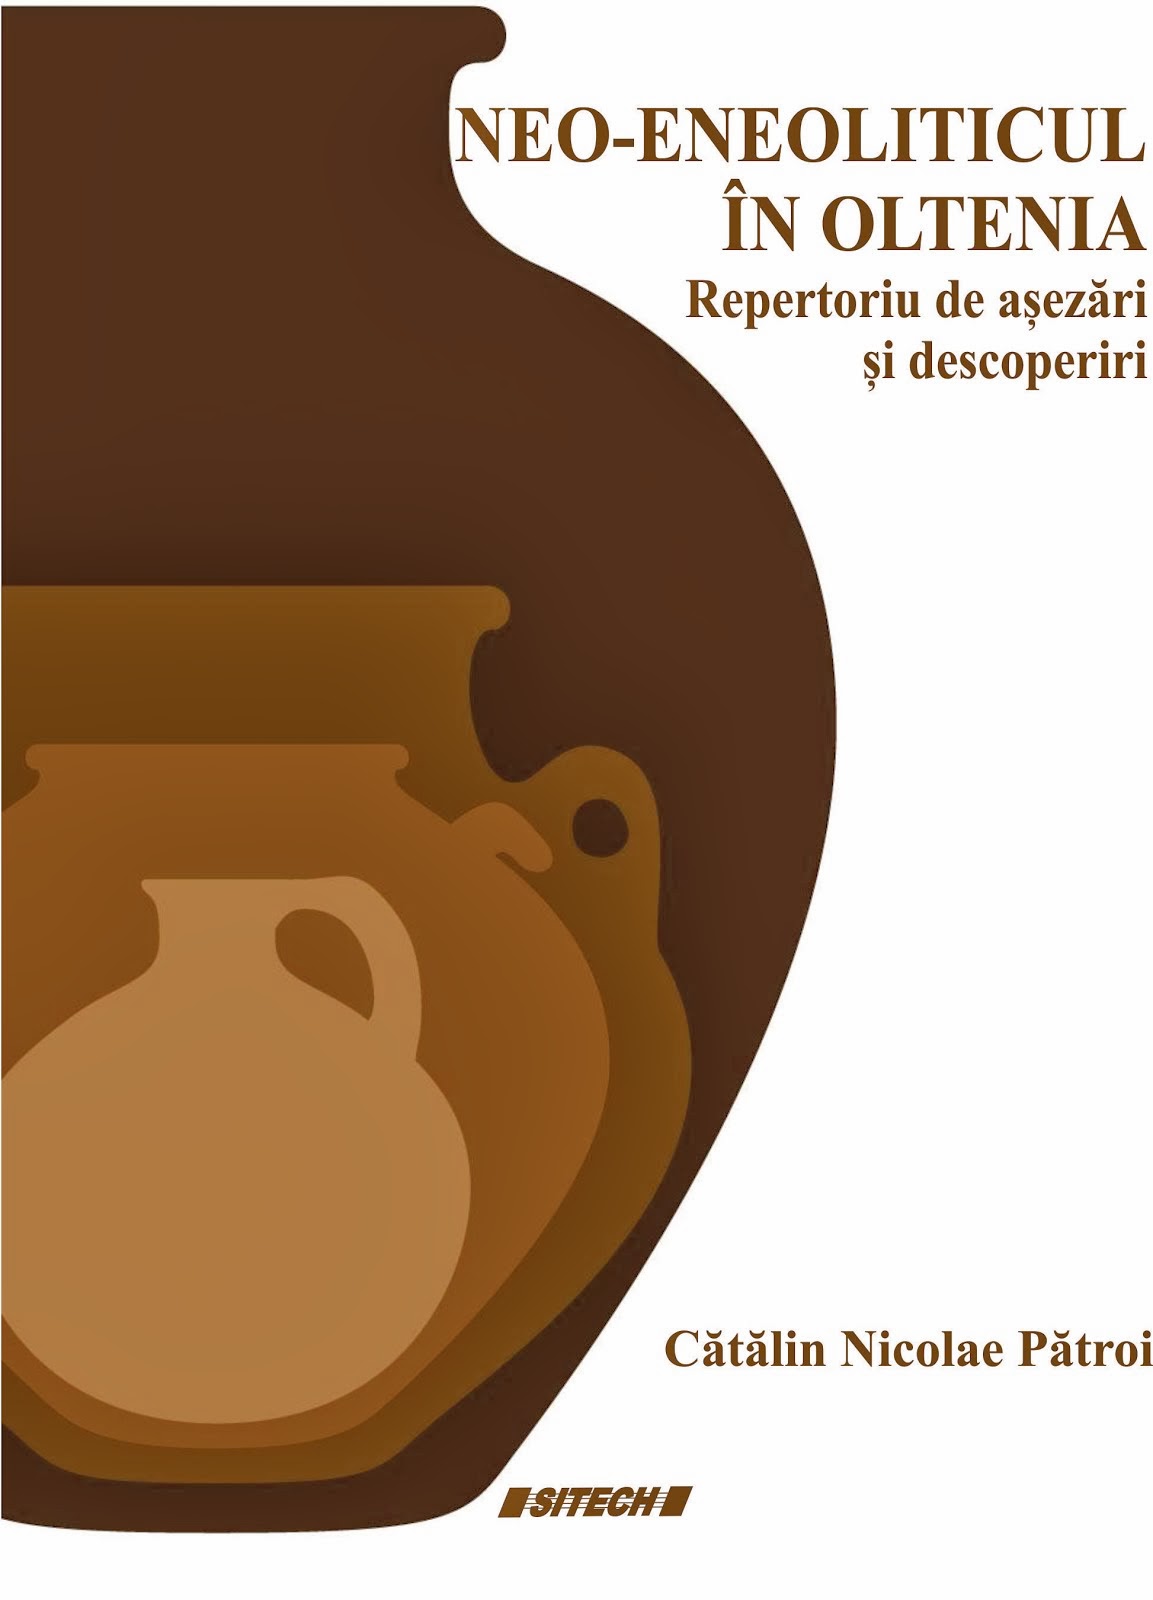 Neo-Eneoliticul in Oltenia. Repertoriu de asezari si descoperiri. Publicat in anul 2013.